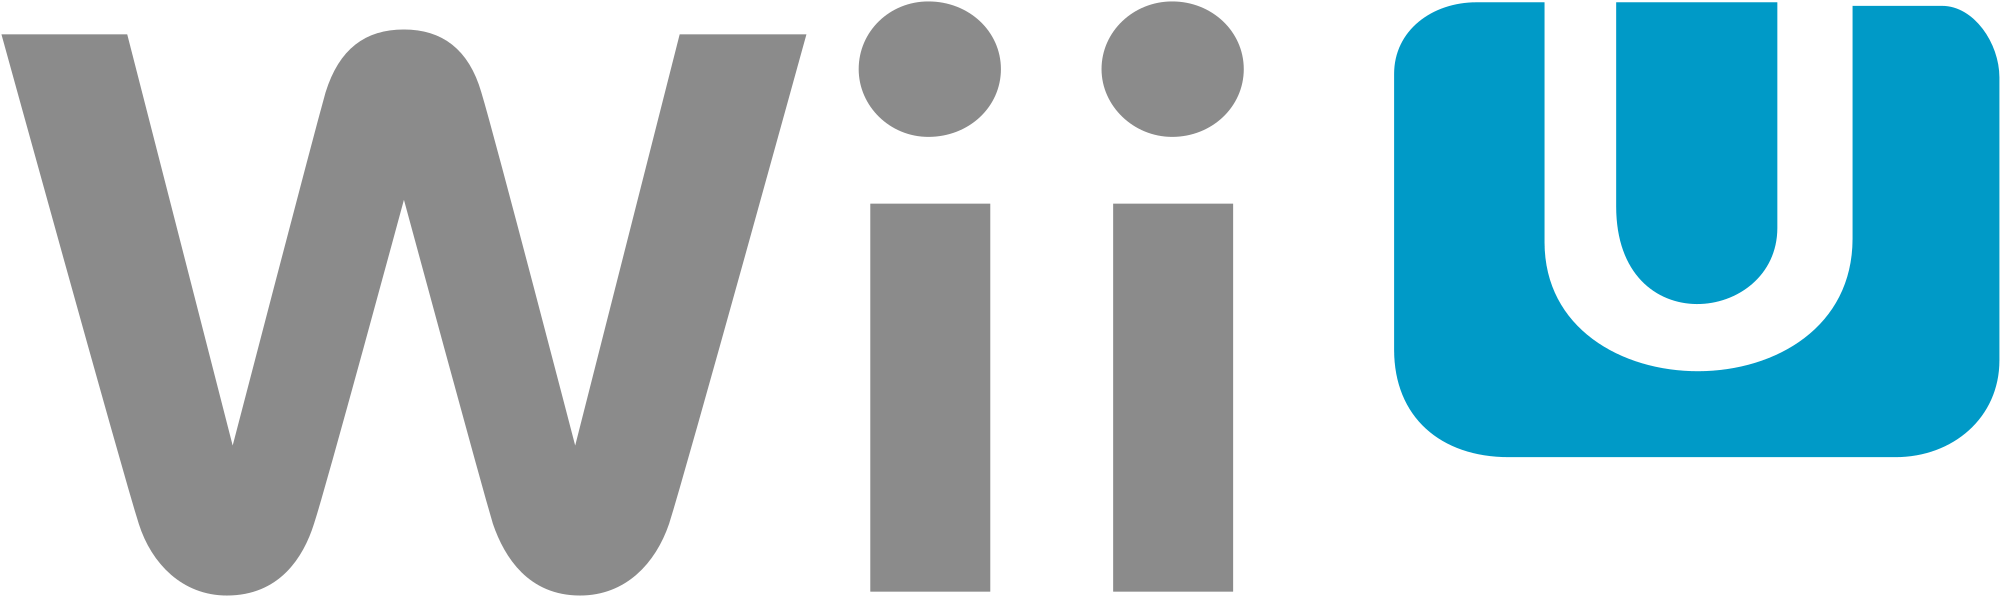 Wii U Logo - WiiU.svg